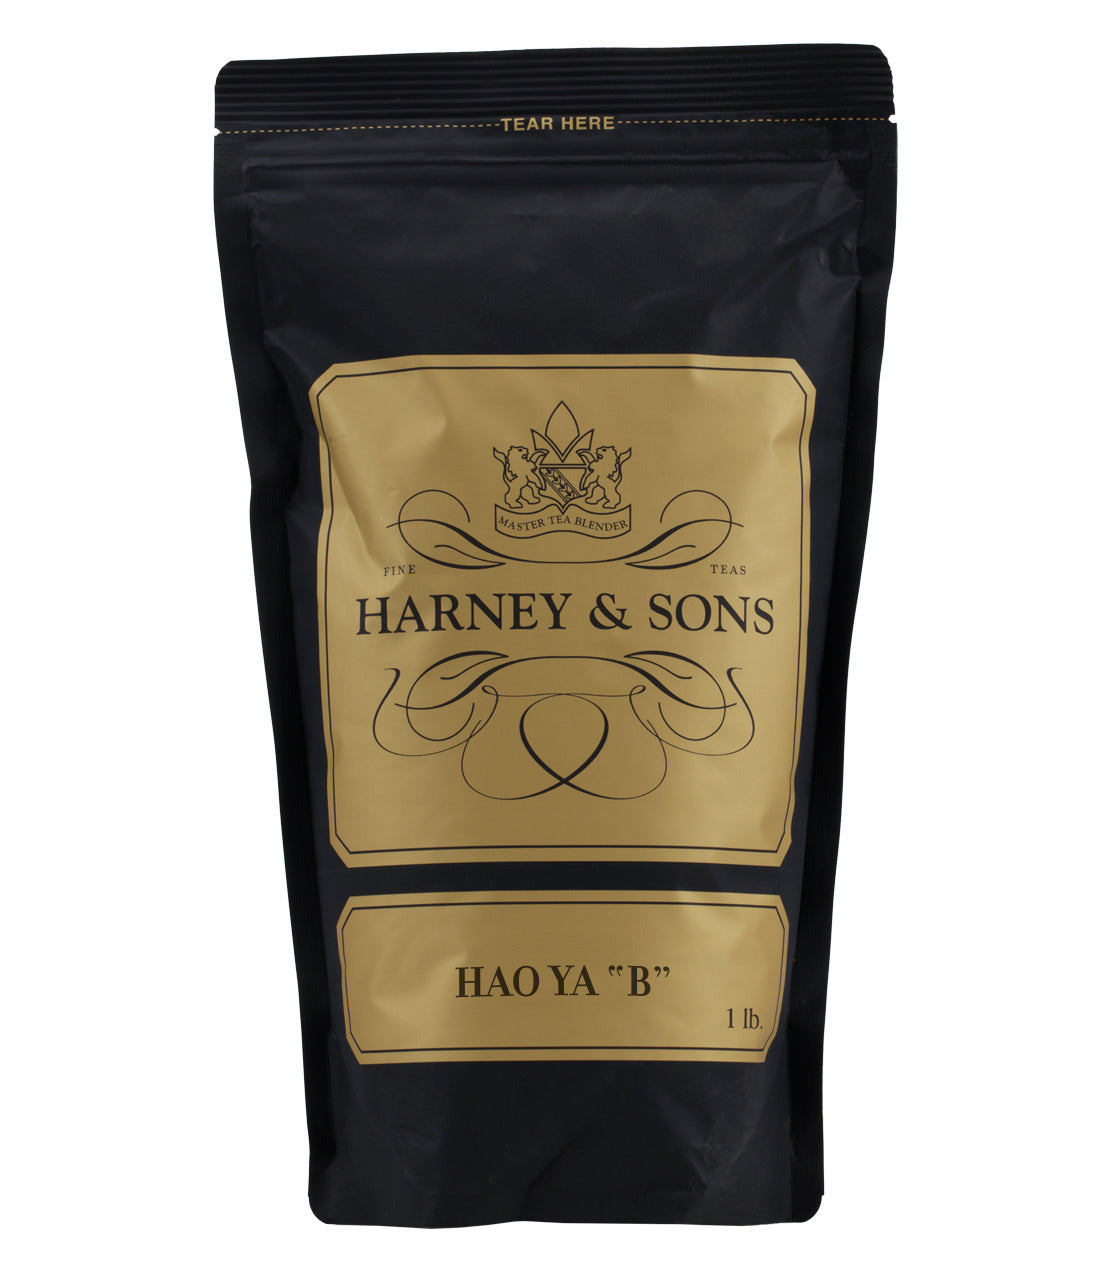 Hao Ya 'B' - Loose 1 lb. Bag - Harney & Sons Fine Teas